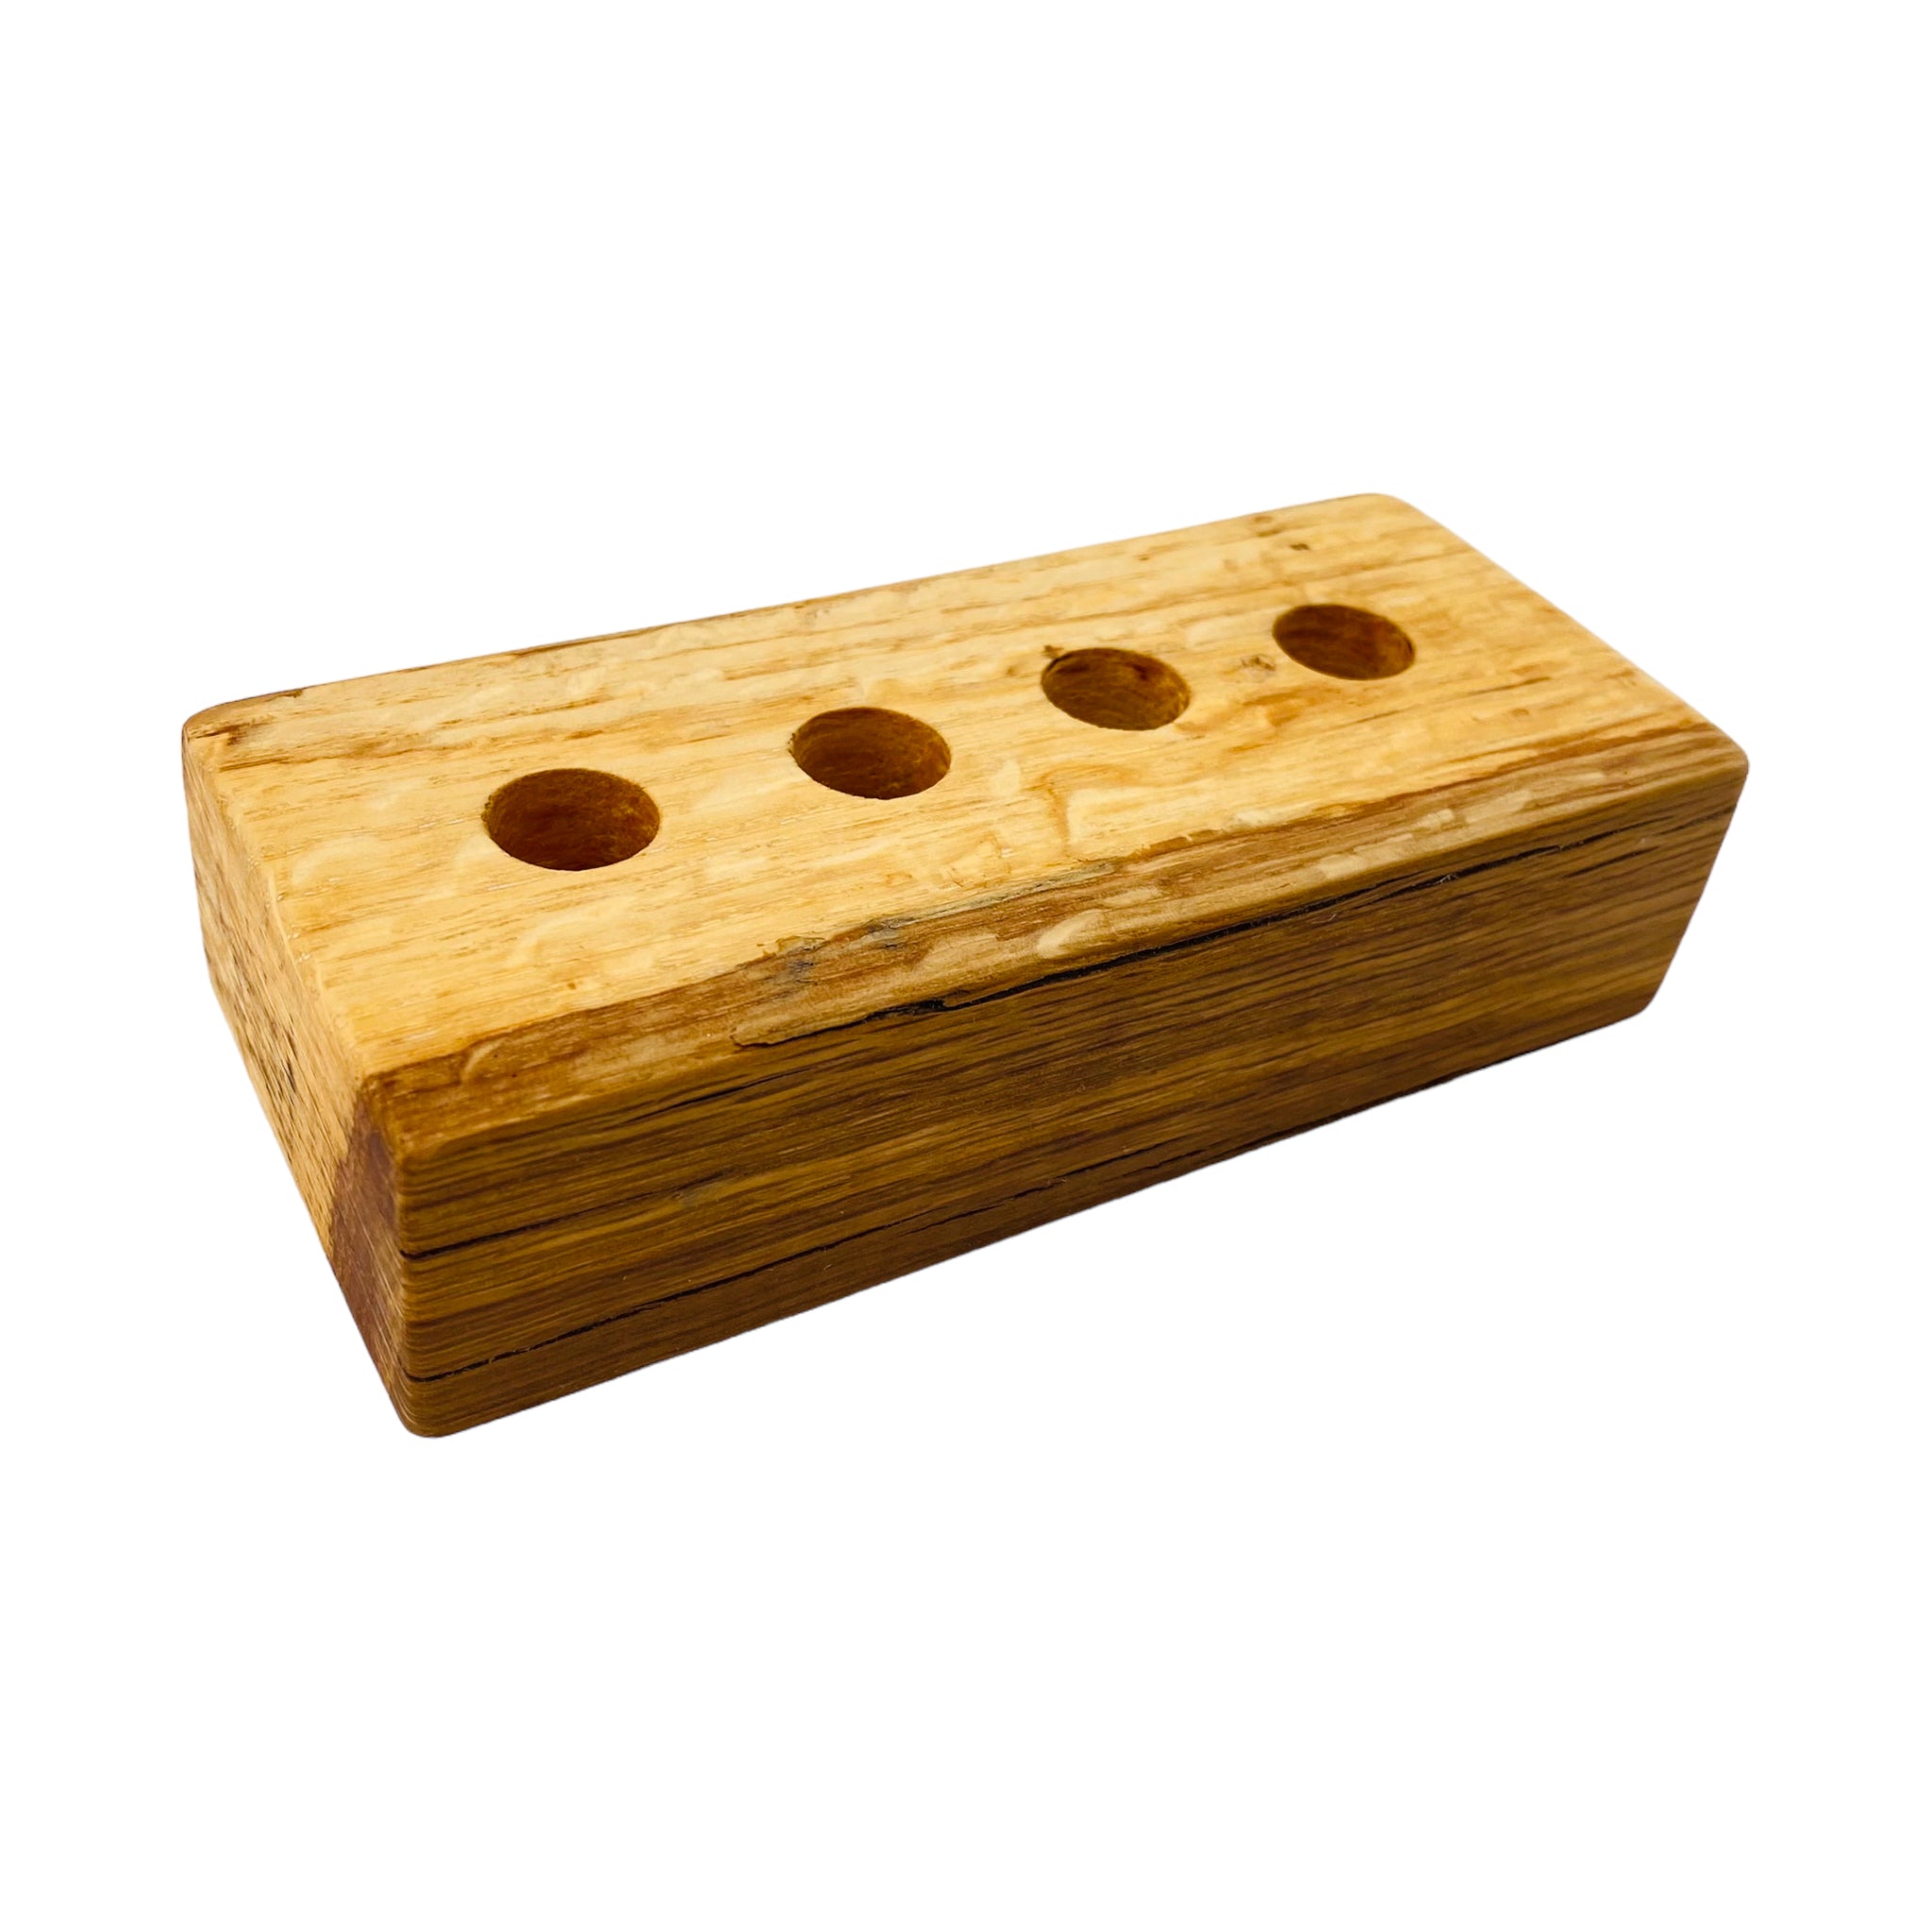 4 Hole Wood Display Stand Holder For 14mm Bong Bowl Pieces Or Quartz Bangers - Cork Oak